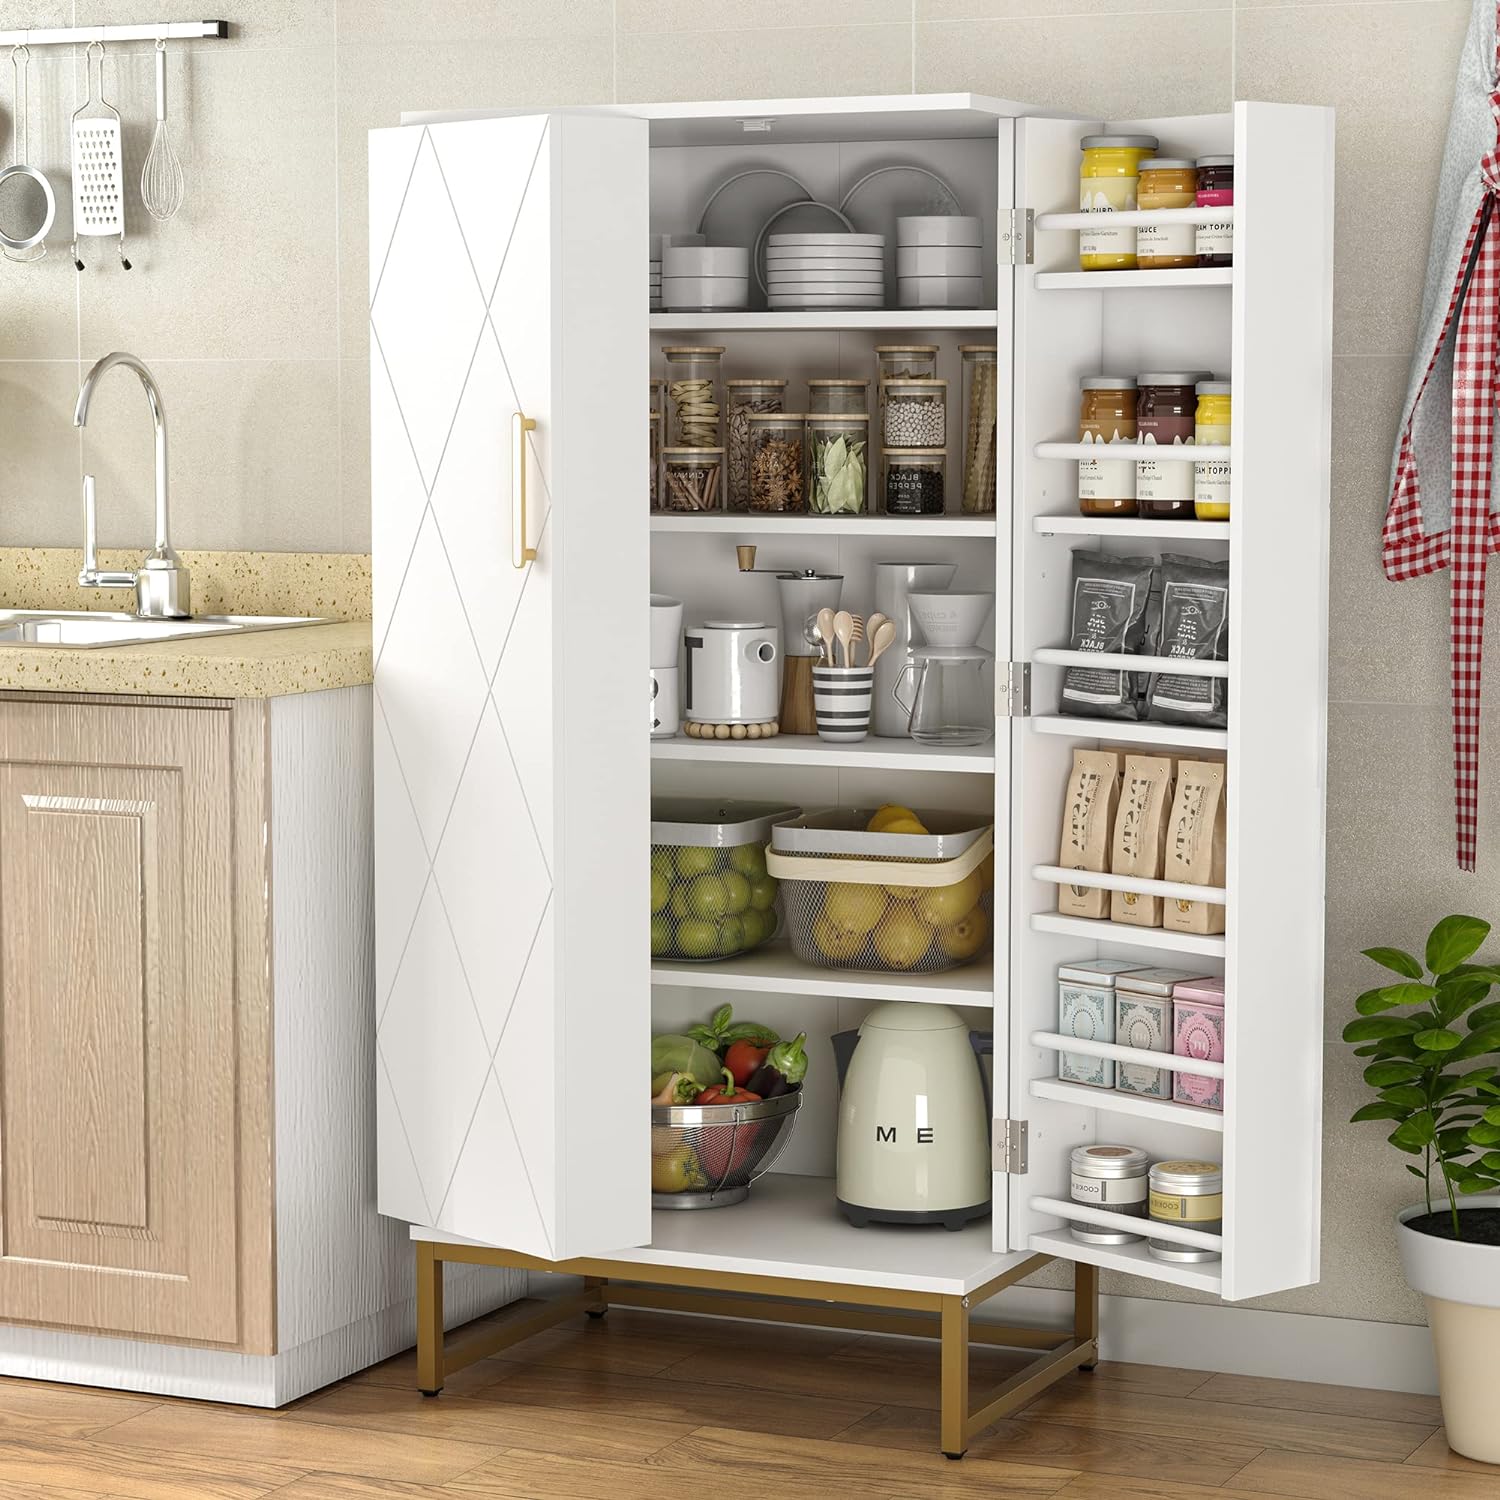 Ryland Kitchen Storage Pantry Cupboard - White & Gold | Larders Direct ...